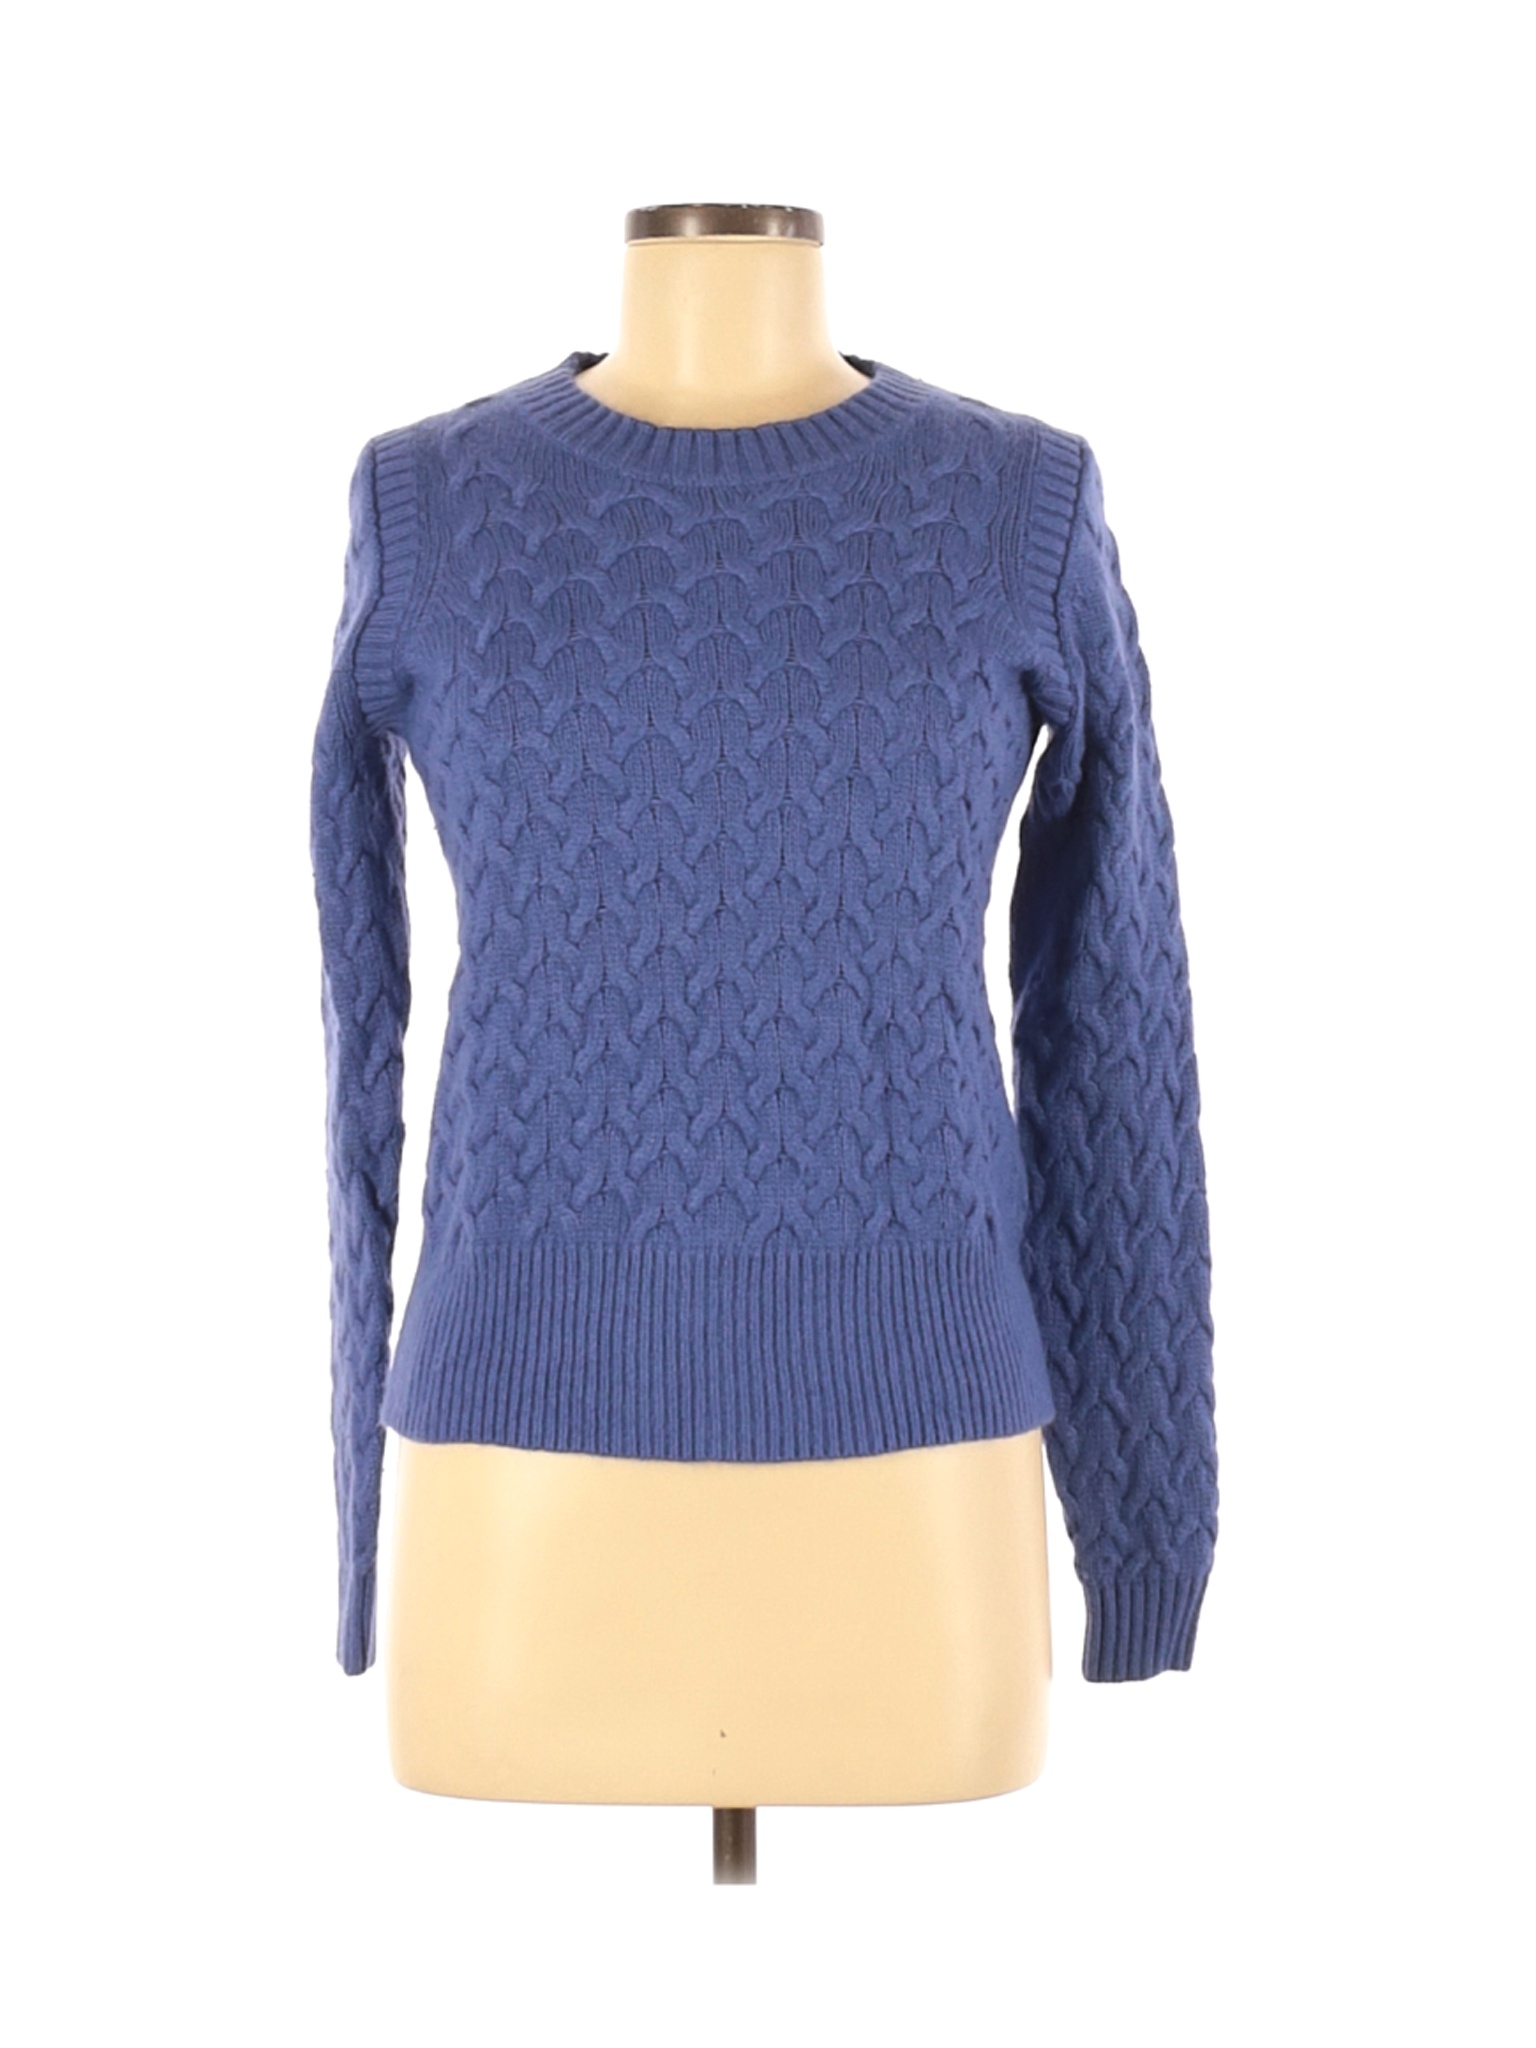 J.Crew Women Blue Pullover Sweater M | eBay